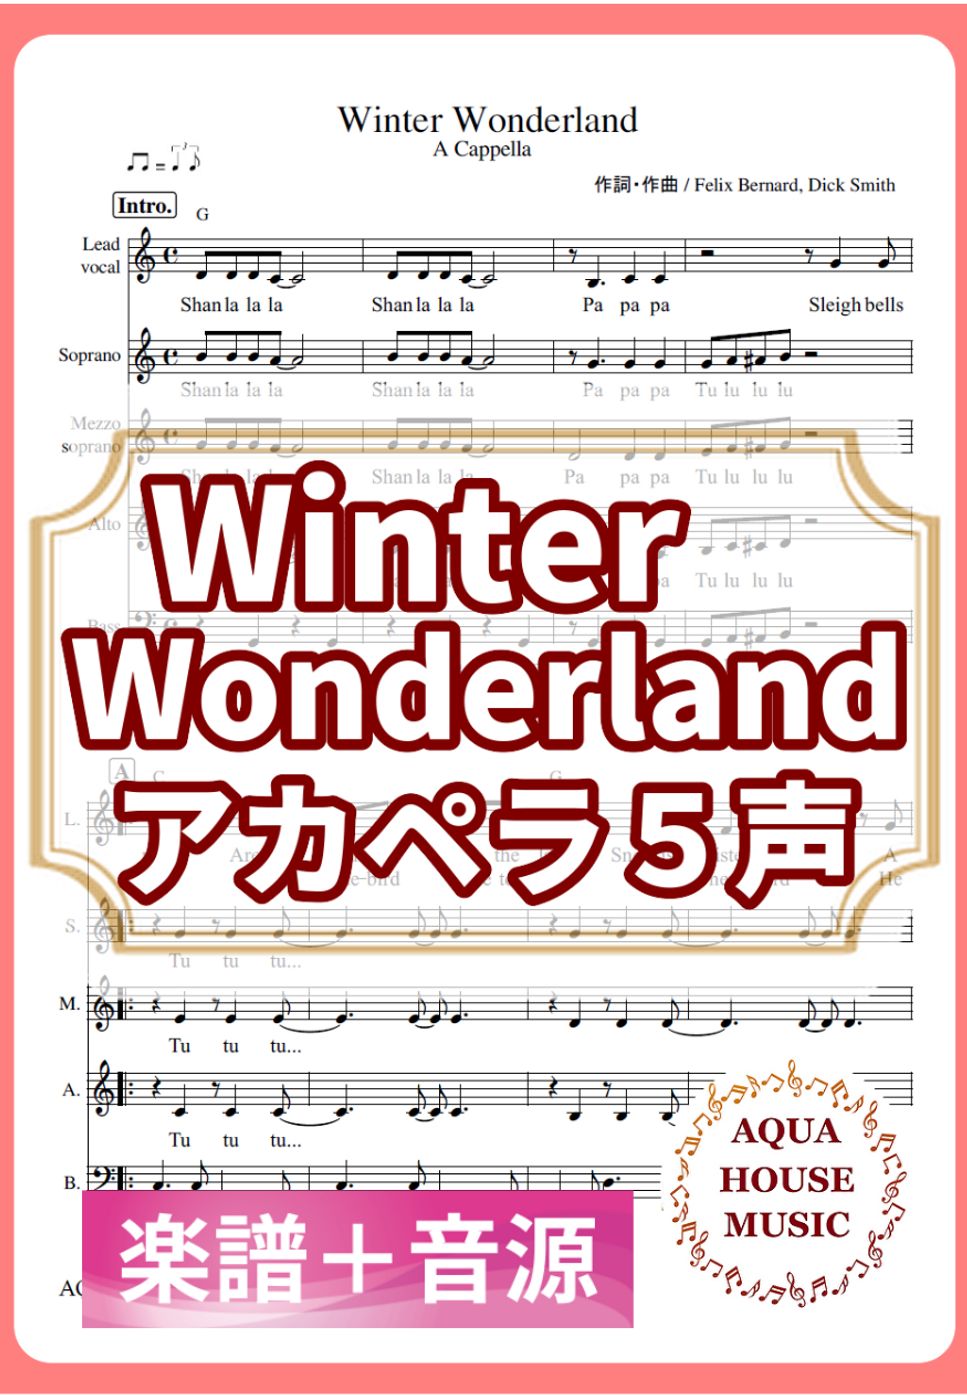 Winter Wonderland (アカペラ楽譜＋練習音源セット販売) by 飯田 亜紗子